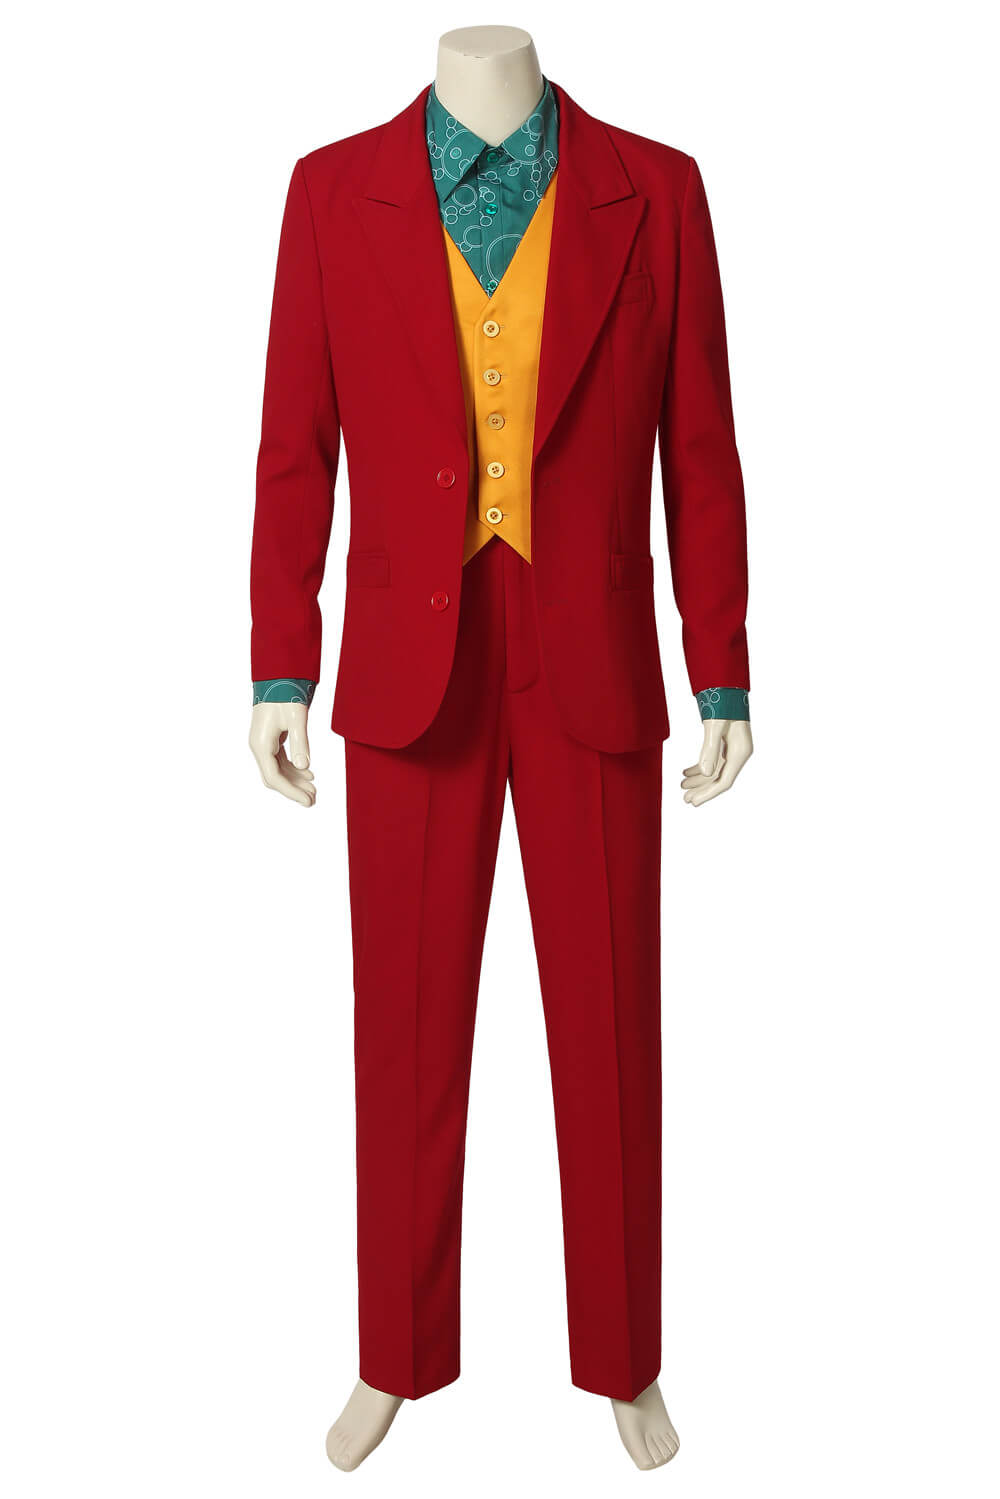 The Joker Clown Red Suit Outfit Uniform Cosplay Costume Men Halloween 2019 - ACcosplay